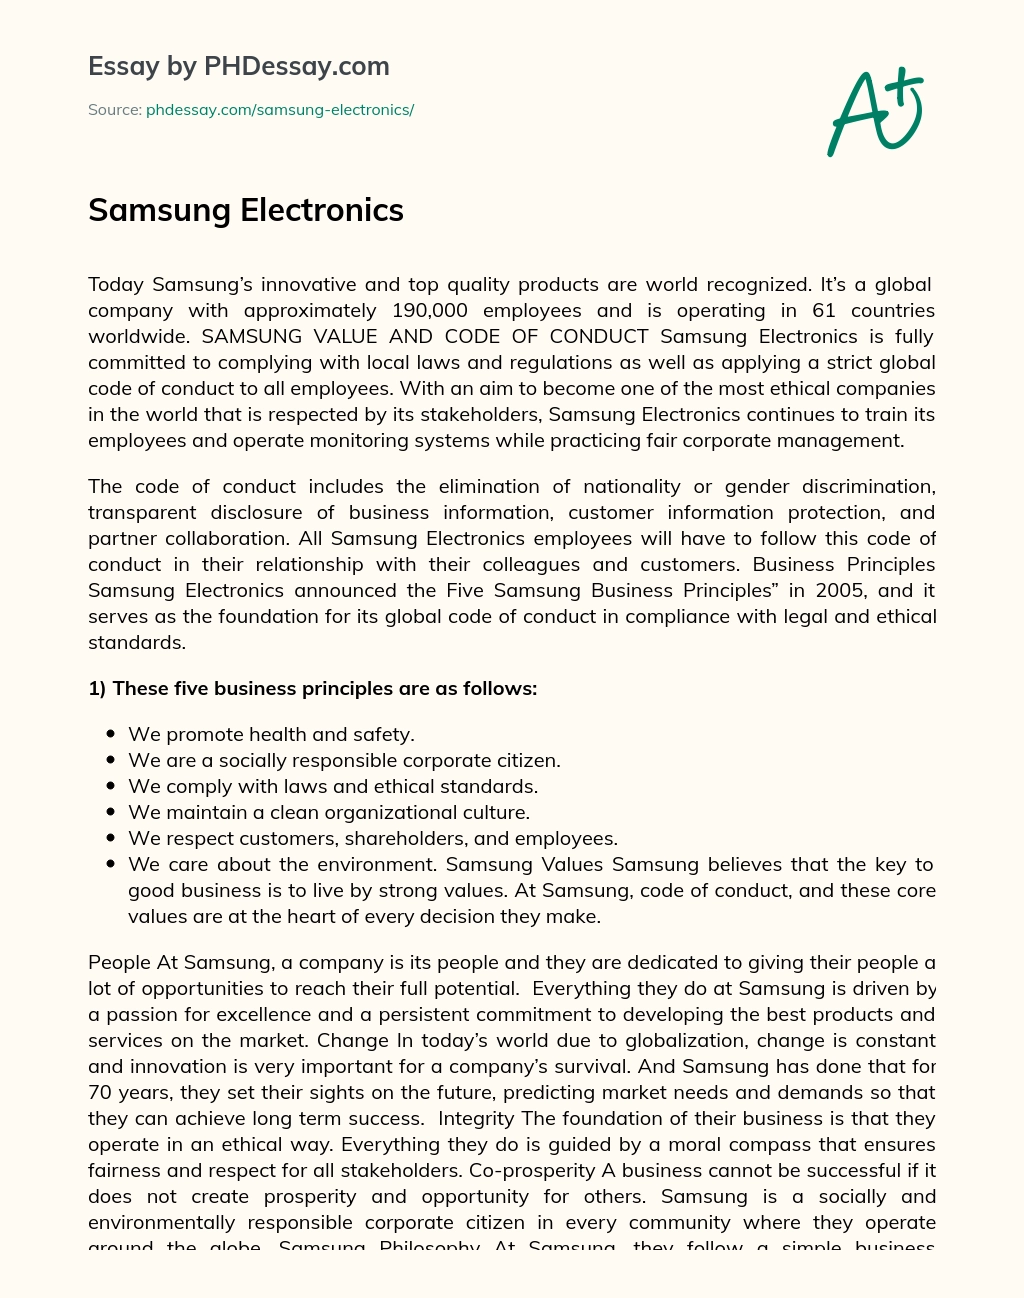 Samsung Electronics essay